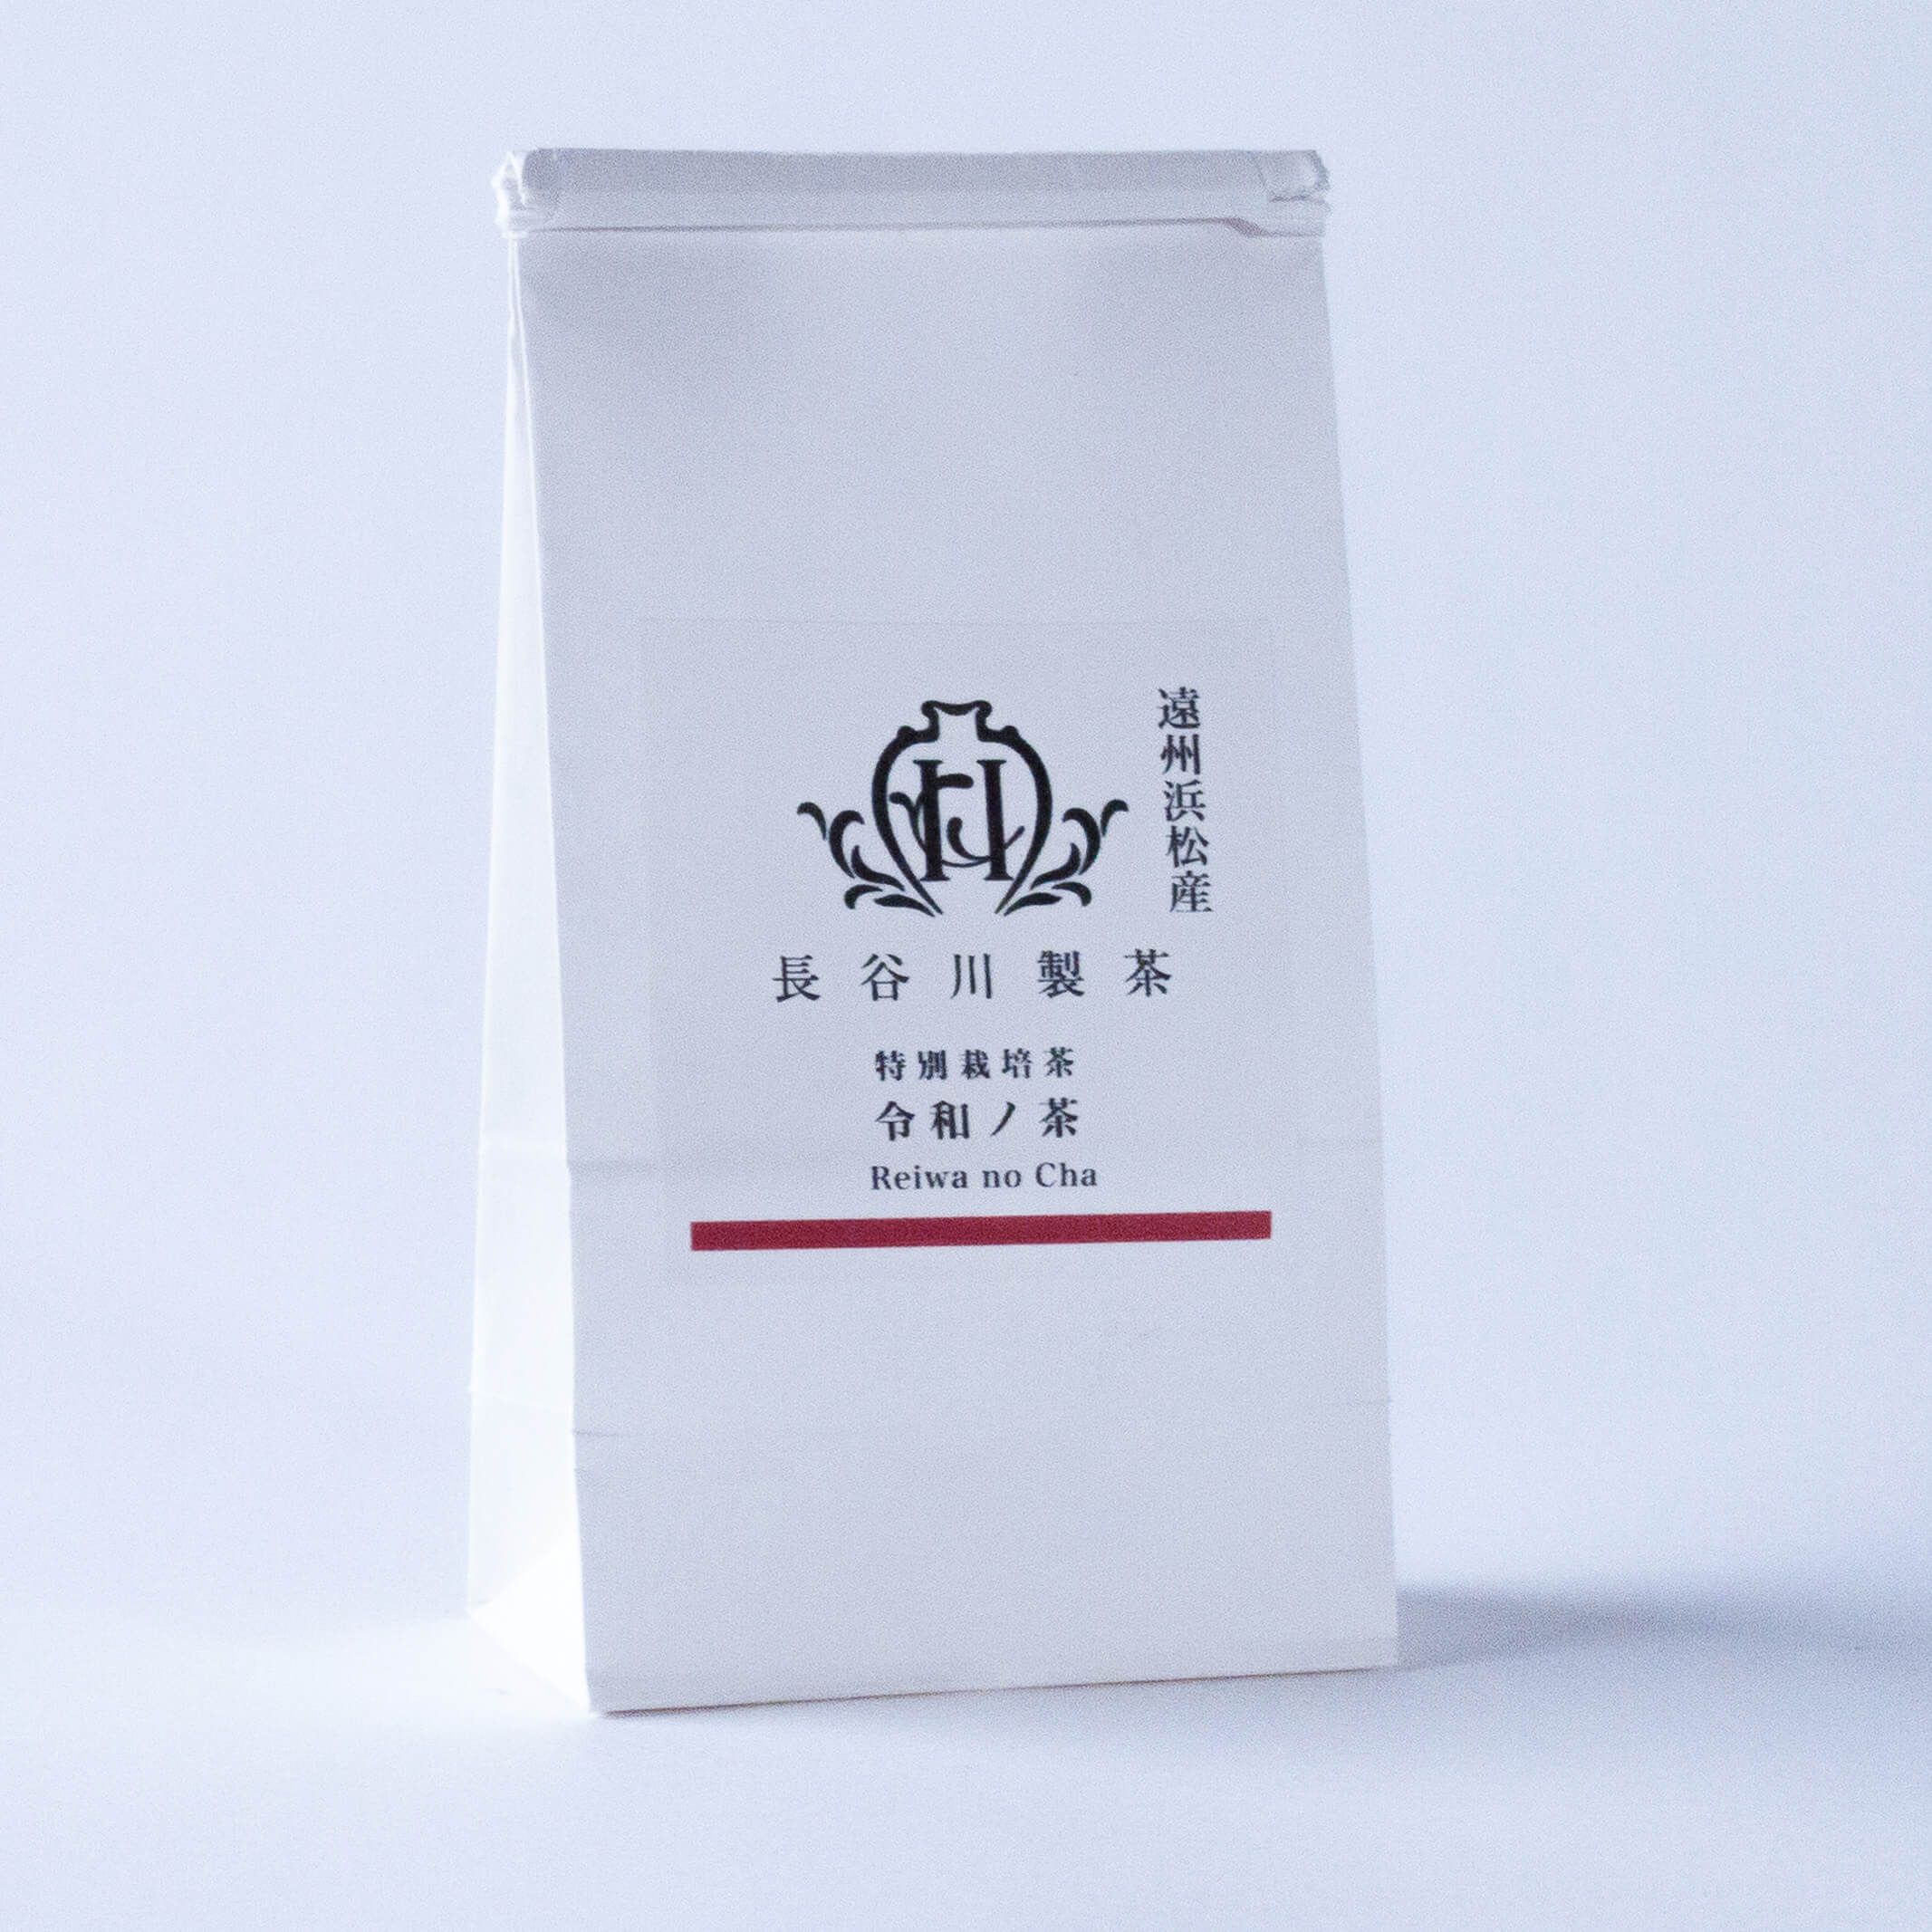 Reiwa tea from Enshu Hamamatsu